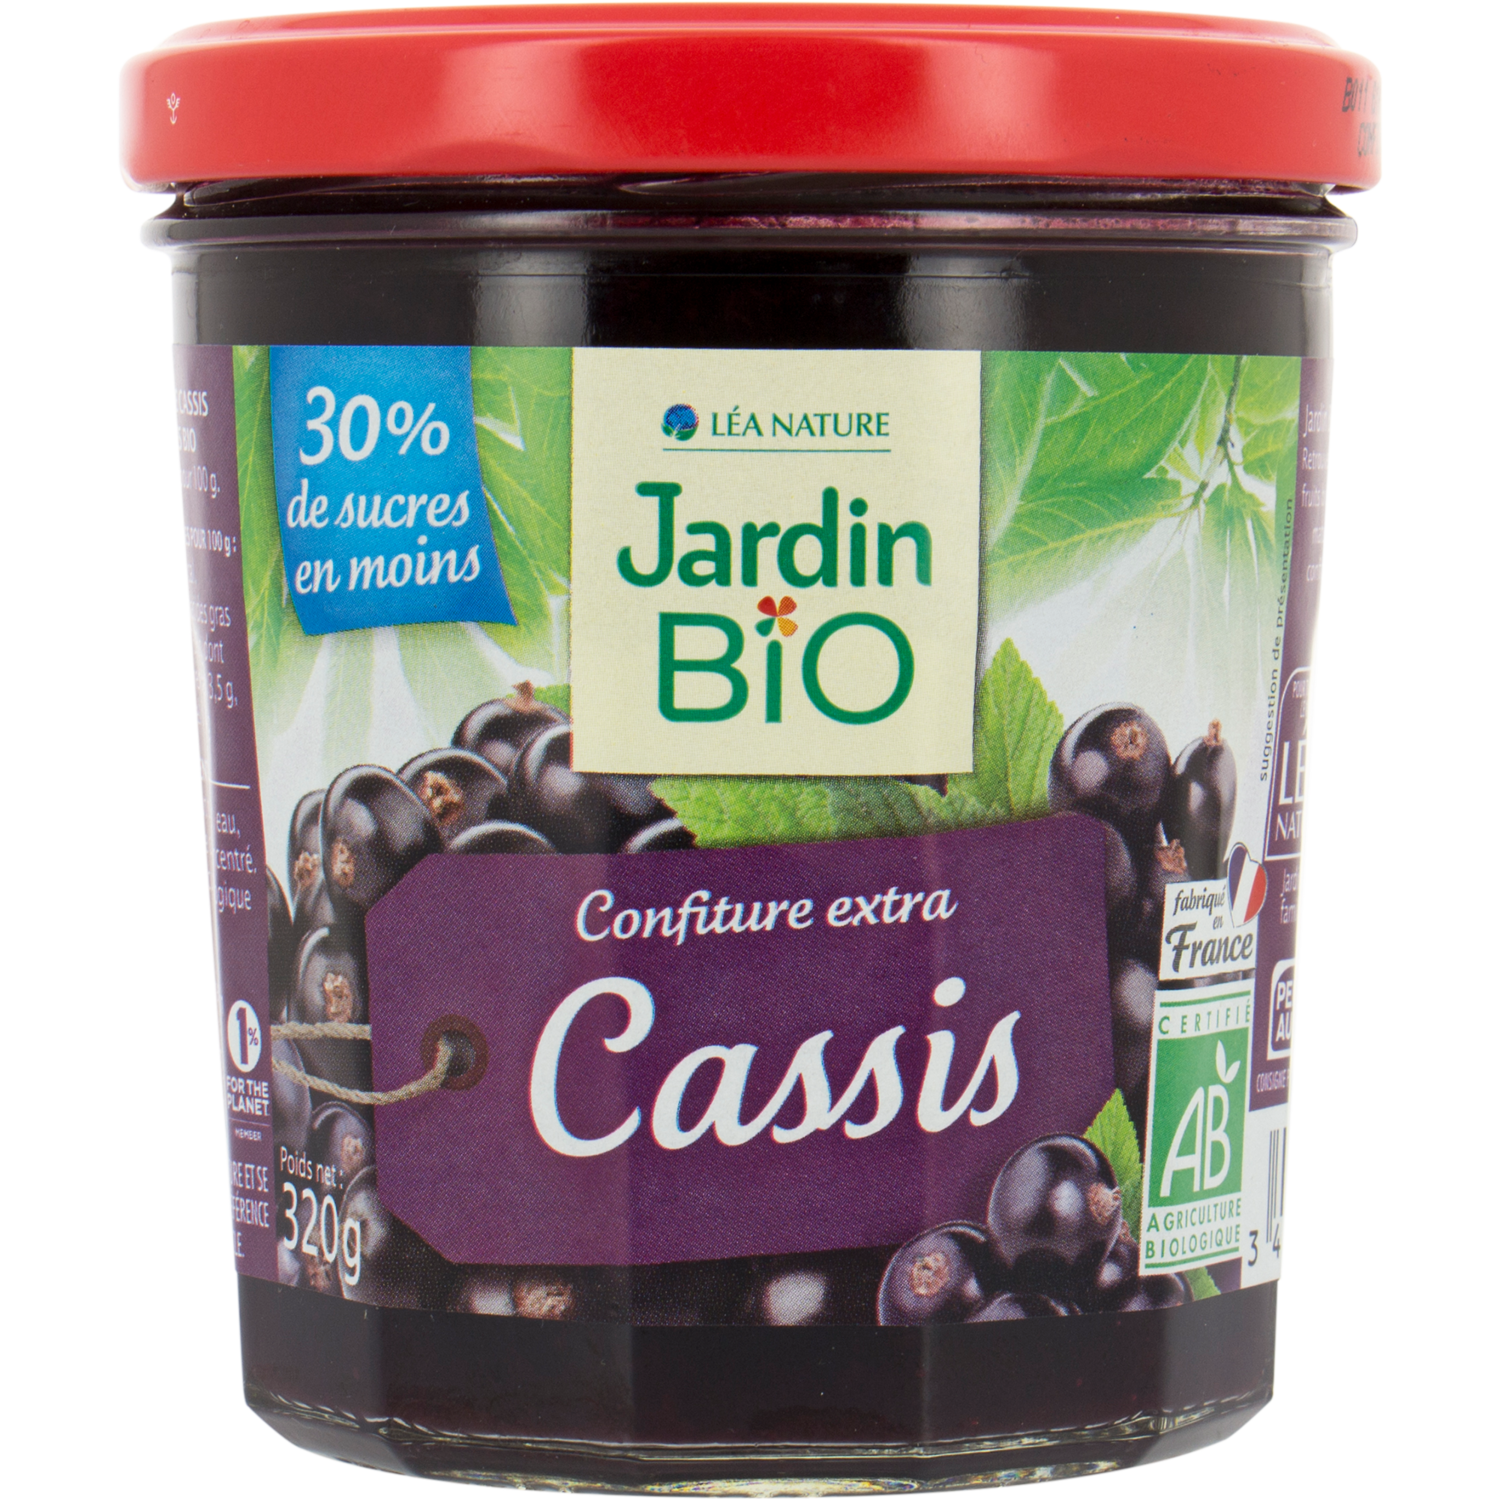 Confiture Biofruit Cassis Bio مربى الكشمش الأسود العضوي (Jar) - Jardin Bio